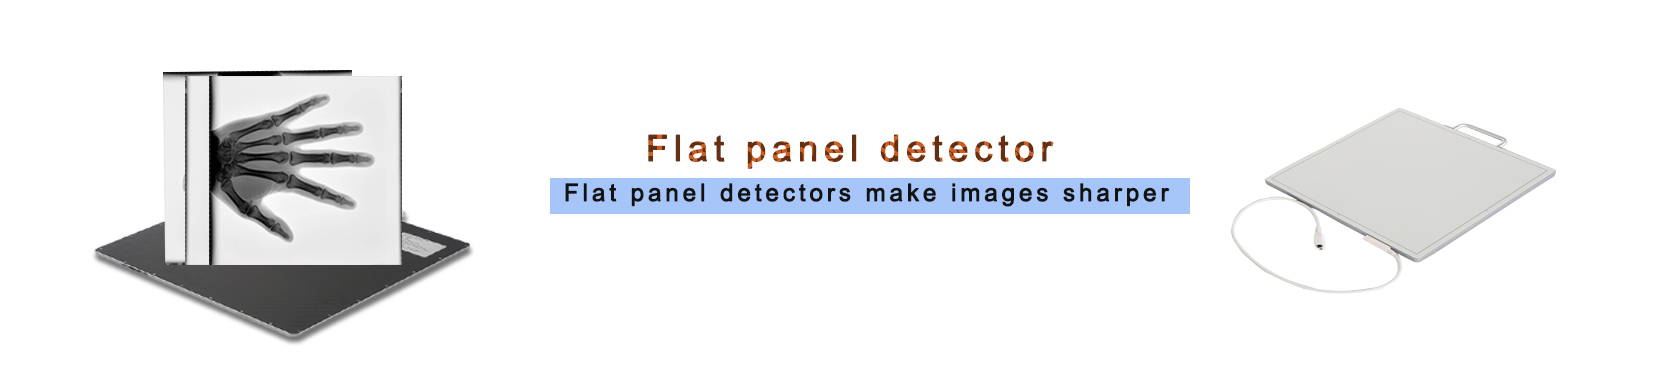 Flat Panel Detector